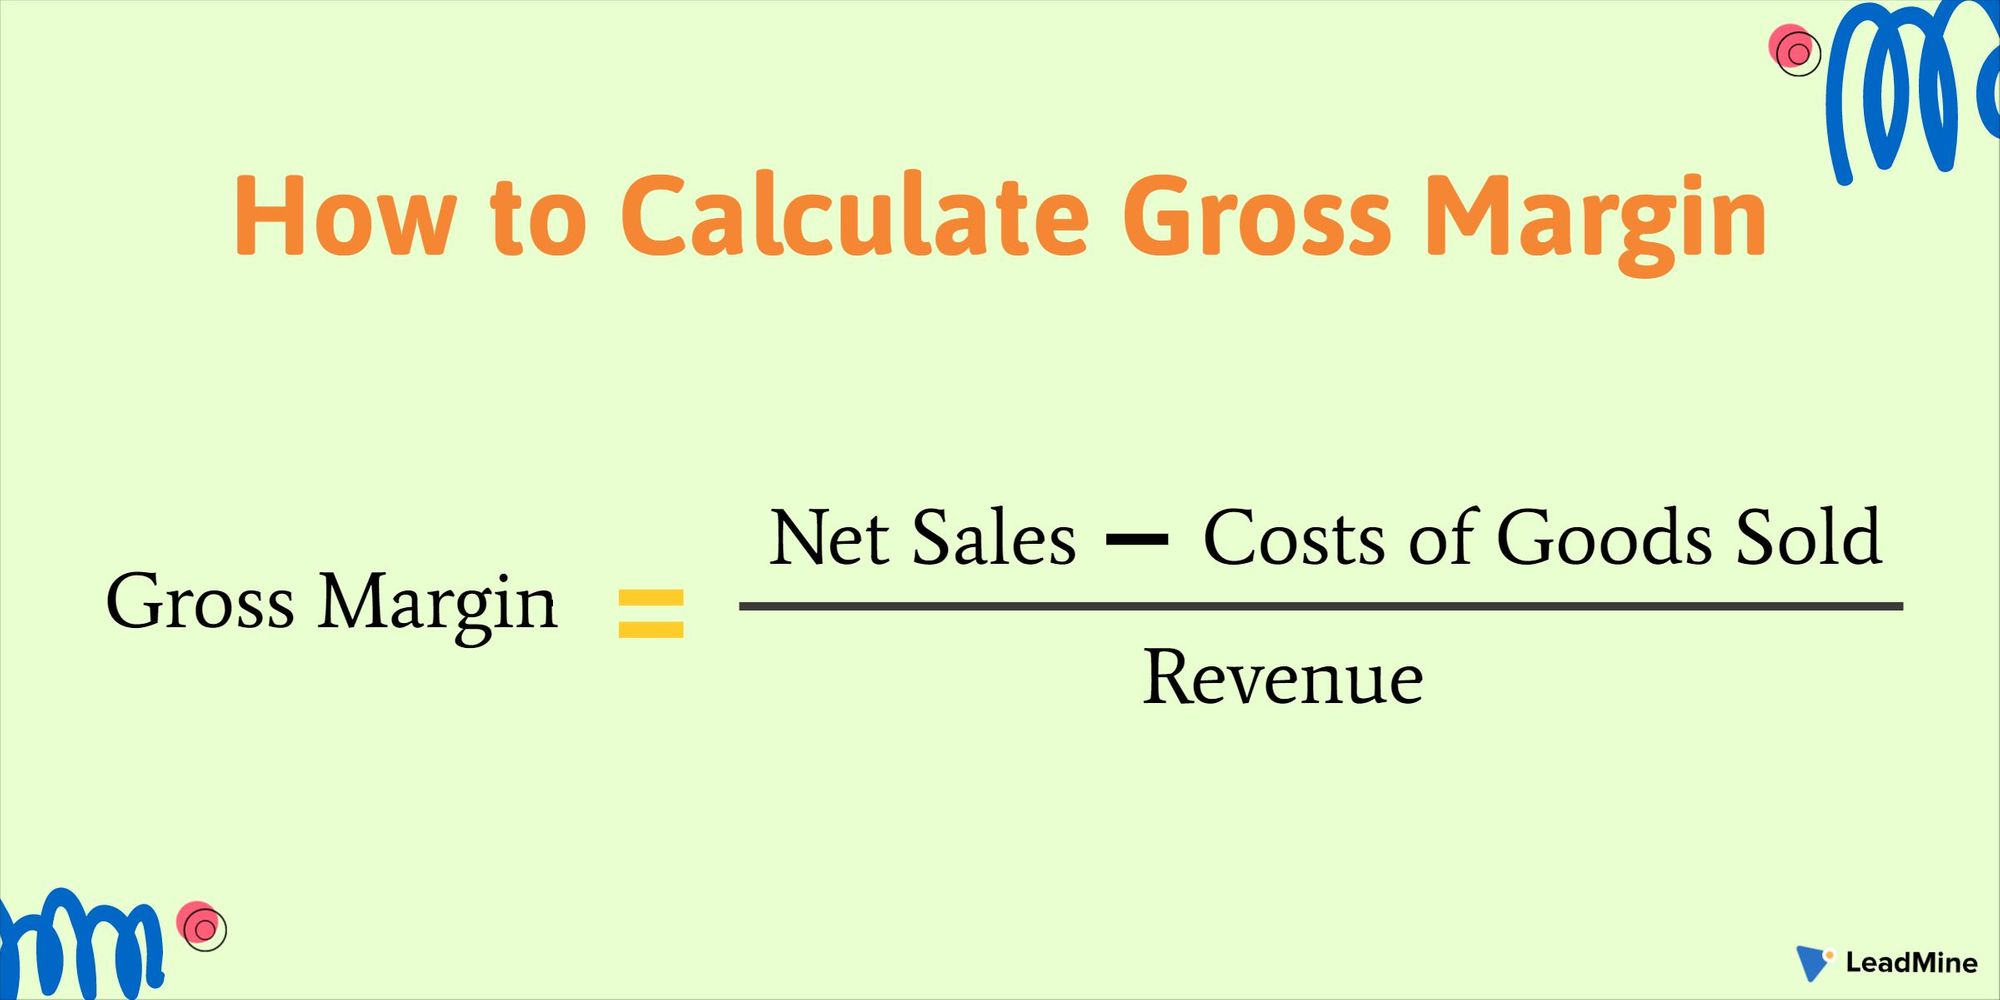 gross-margin-definition-formula-profit-margin-vs-gross-margin